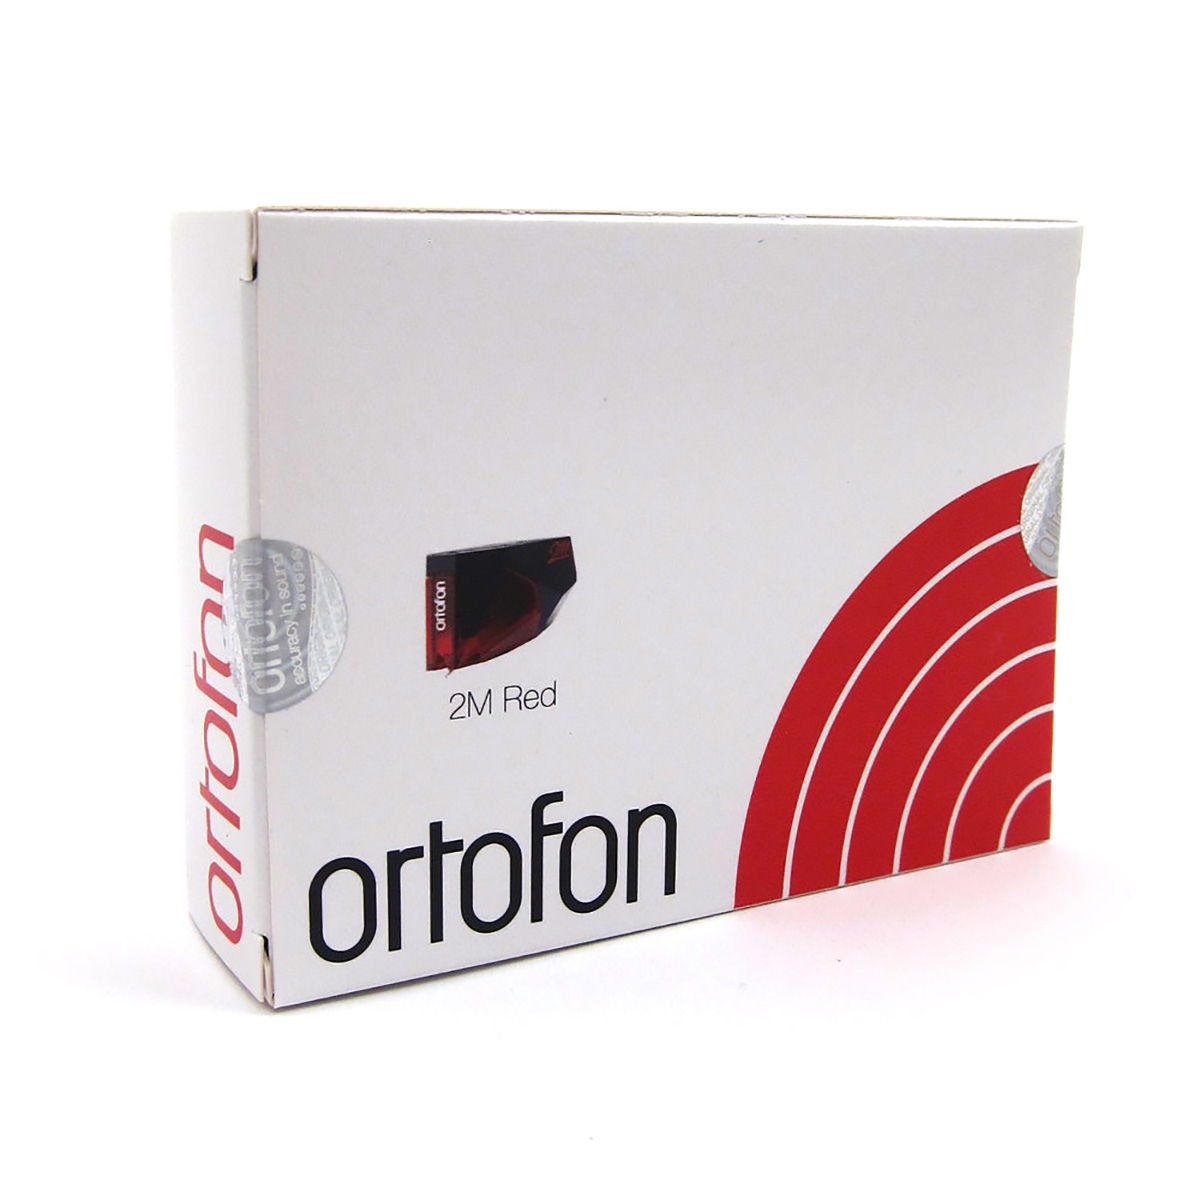 Ortofon • 2M Red • Cellule à aimant mobile • Moving magnet cartridge • Standard • Neuve